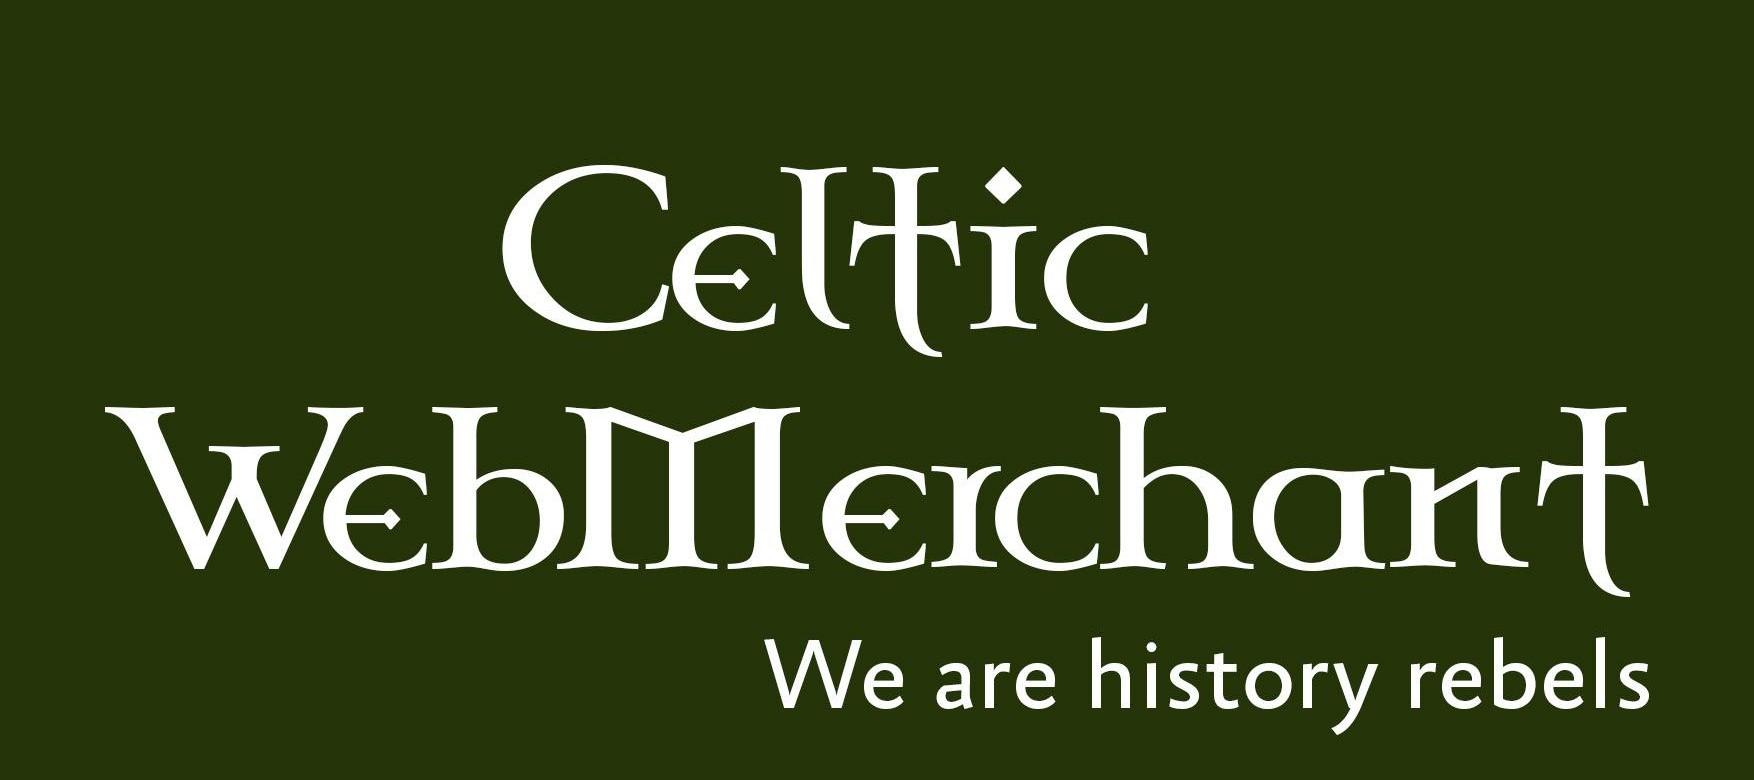 Celtic Web Merchant